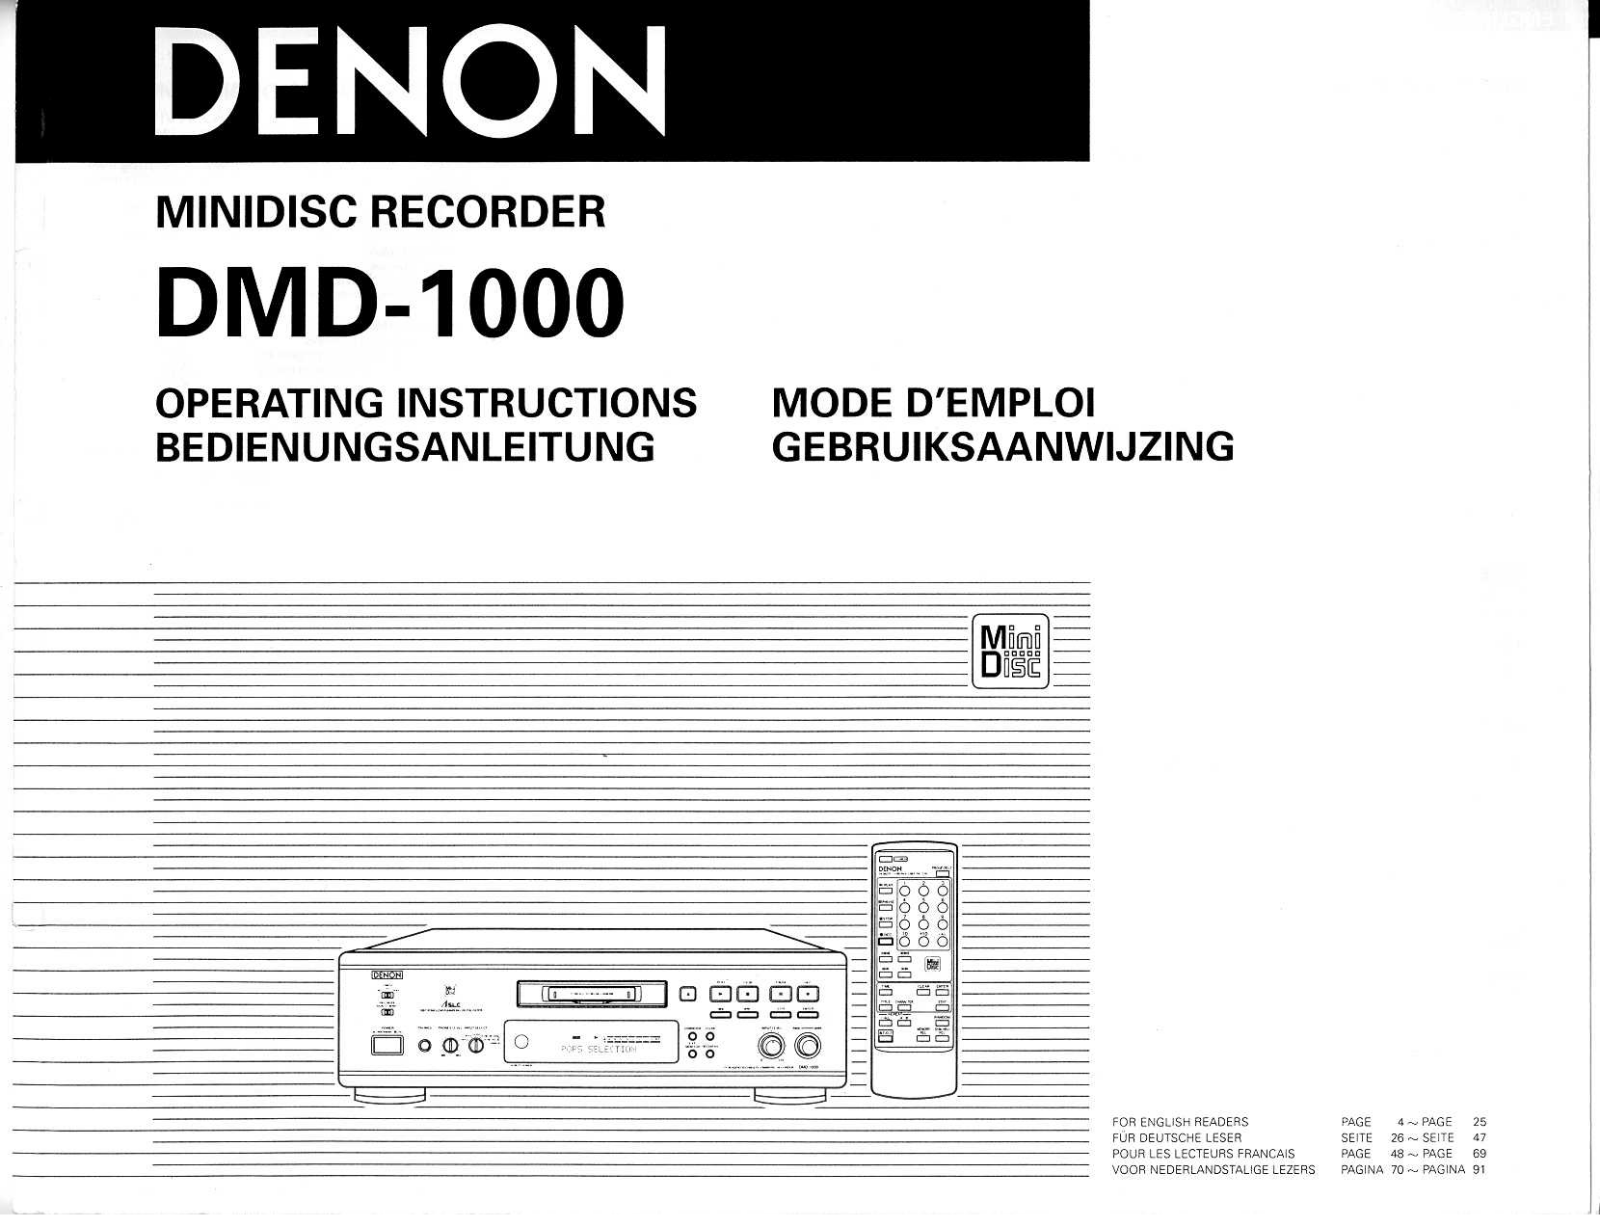 Denon DMD-1000 OPERATING INSTRUCTIONS